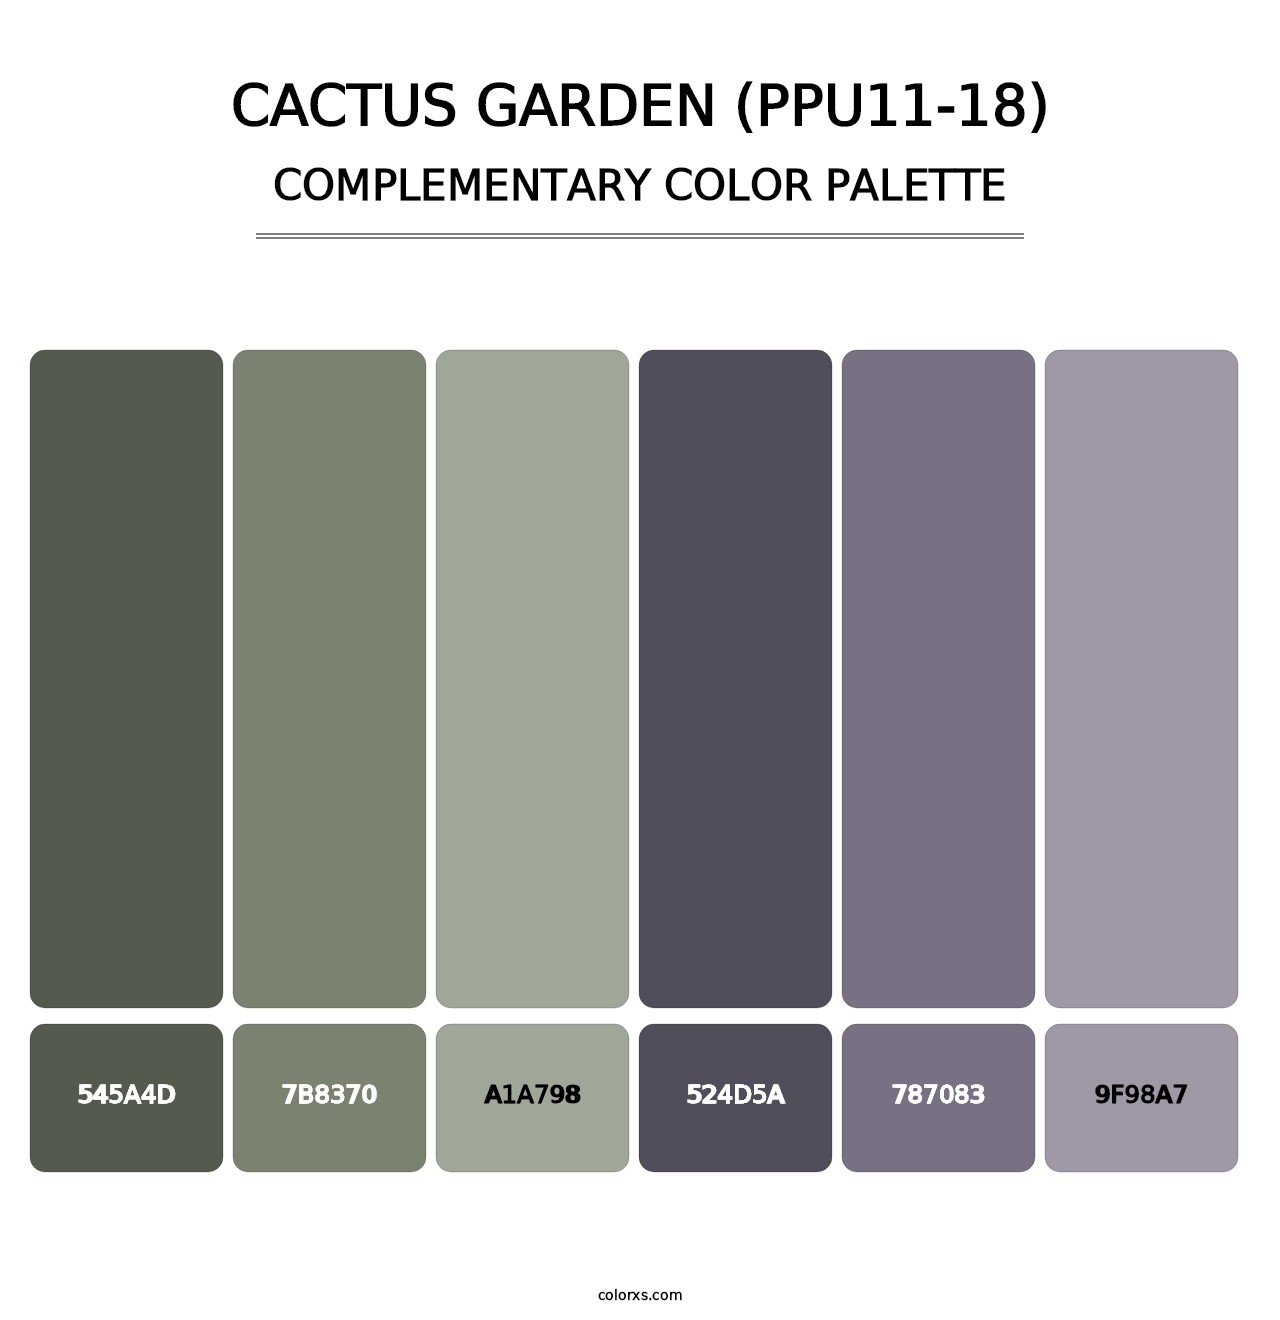 Cactus Garden (PPU11-18) - Complementary Color Palette